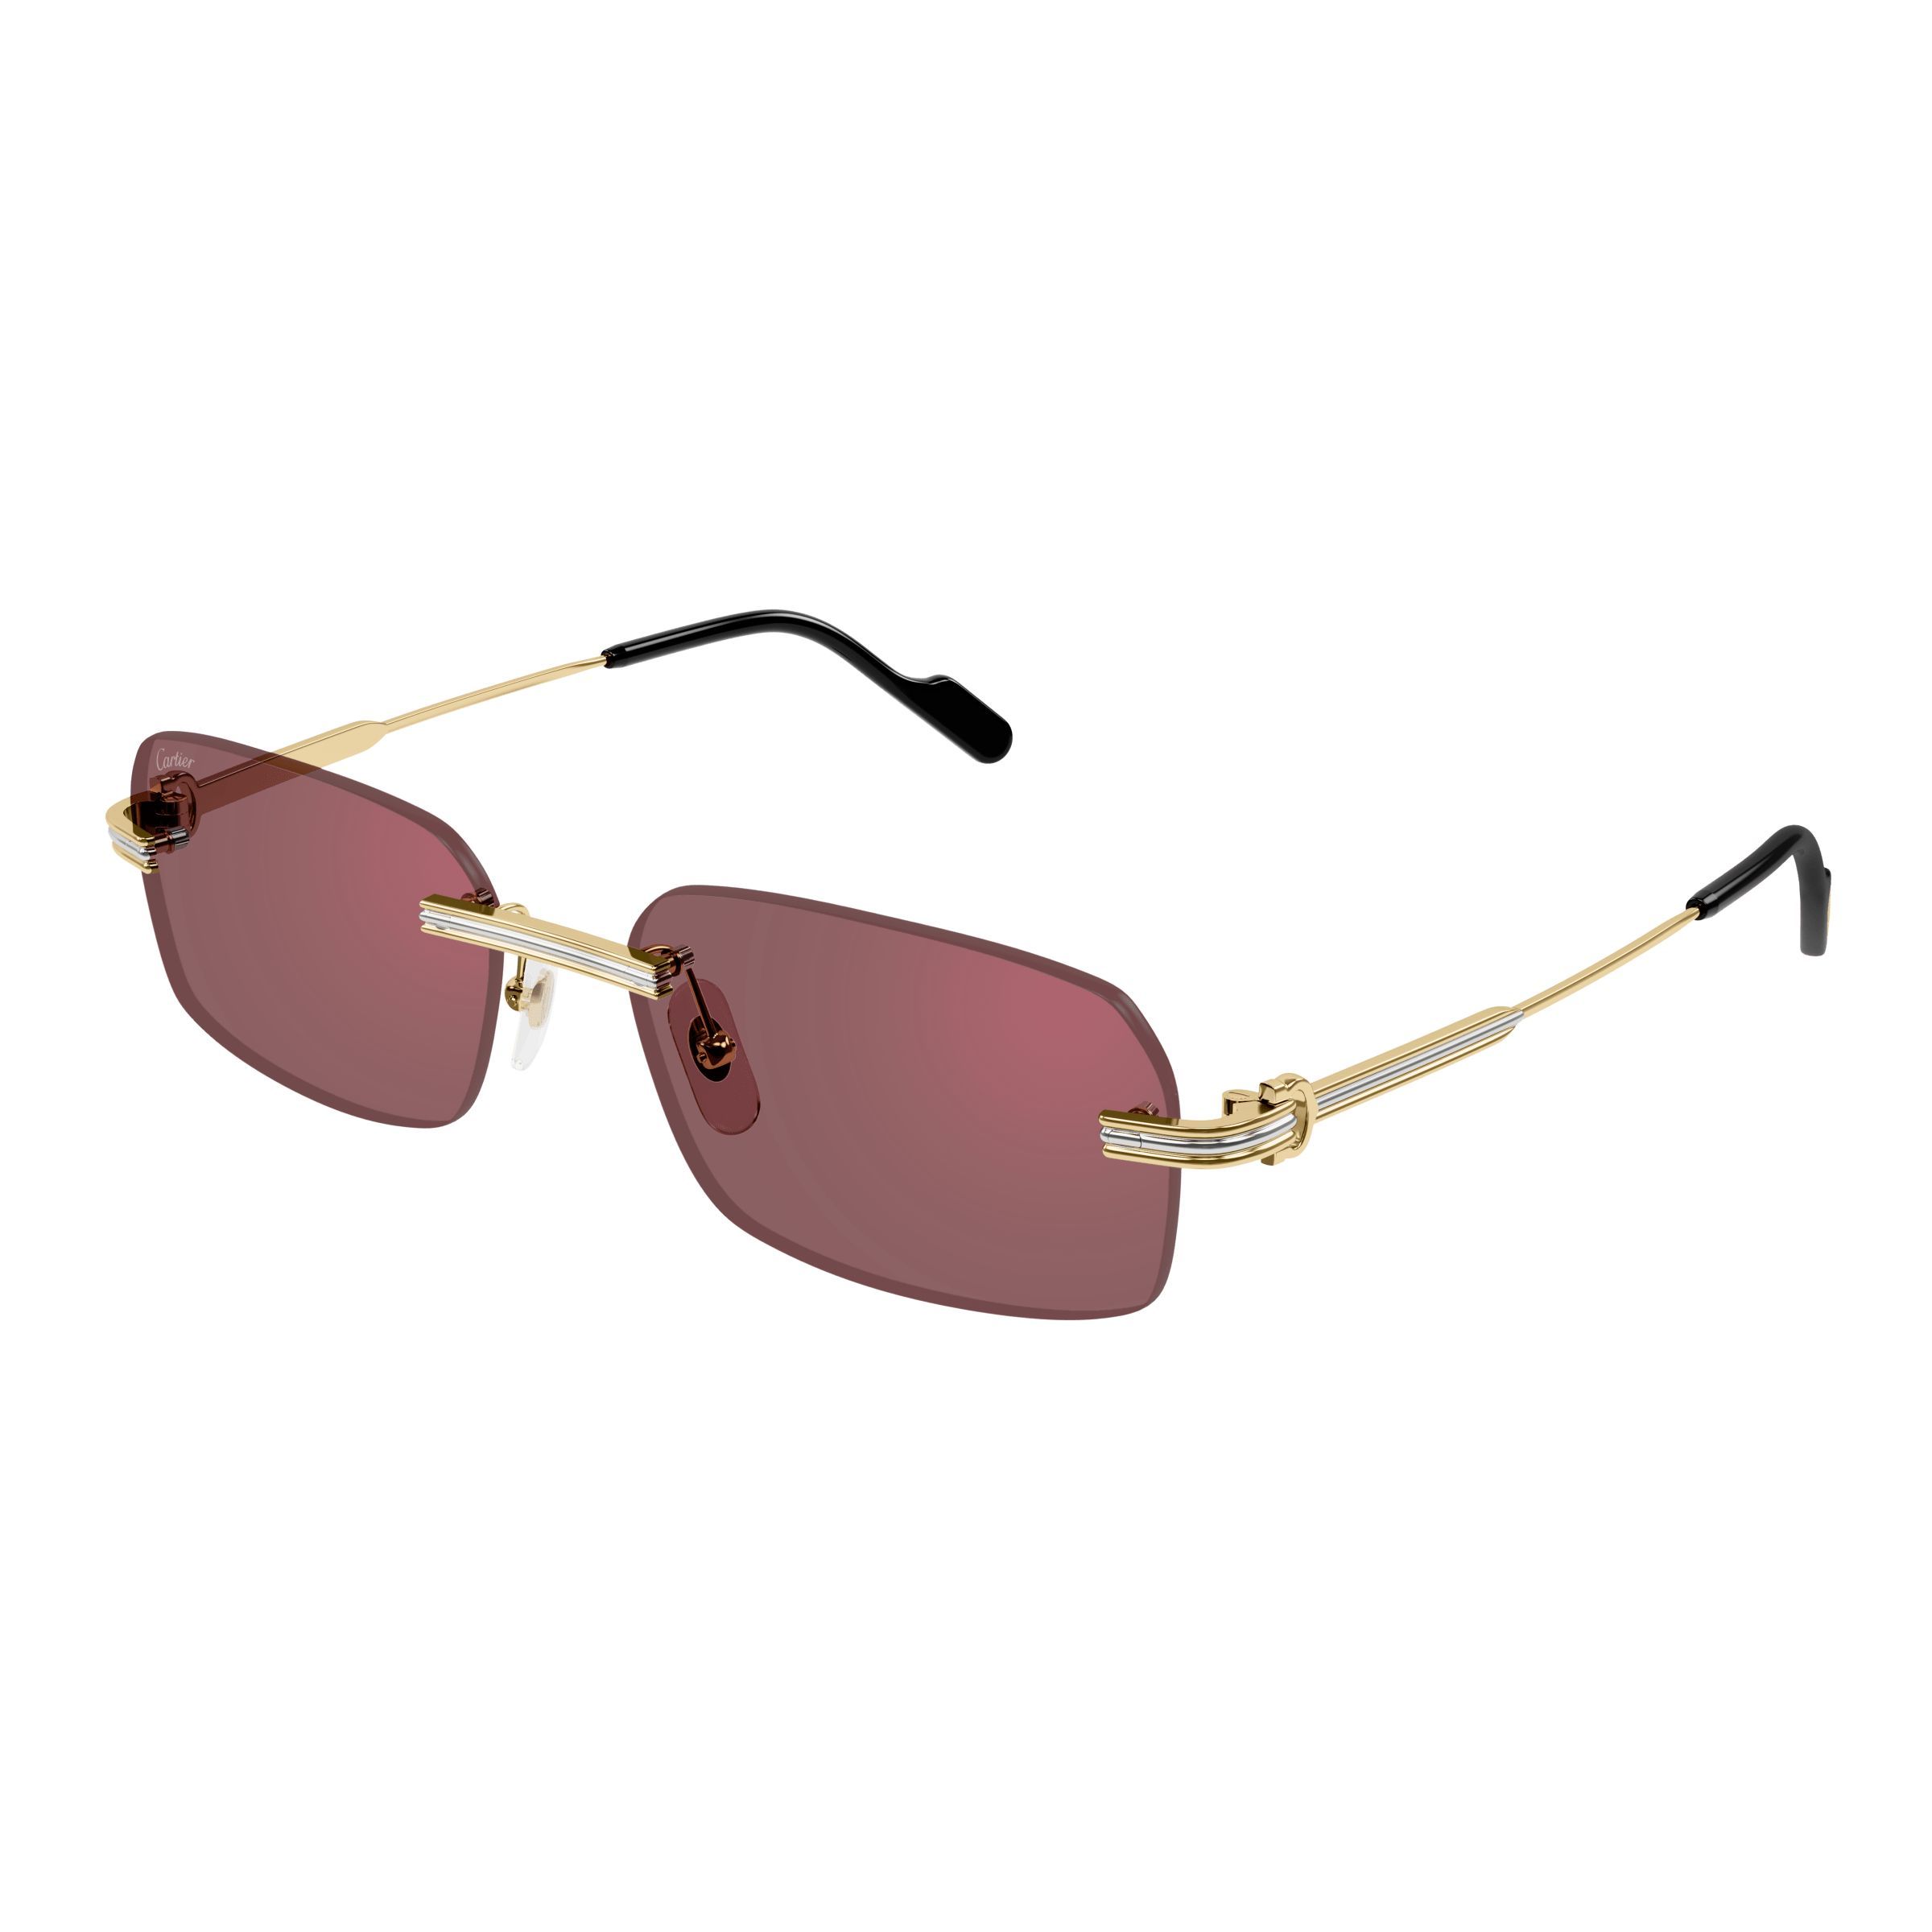 CT0271S Rectangle Sunglasses 008 - size 58